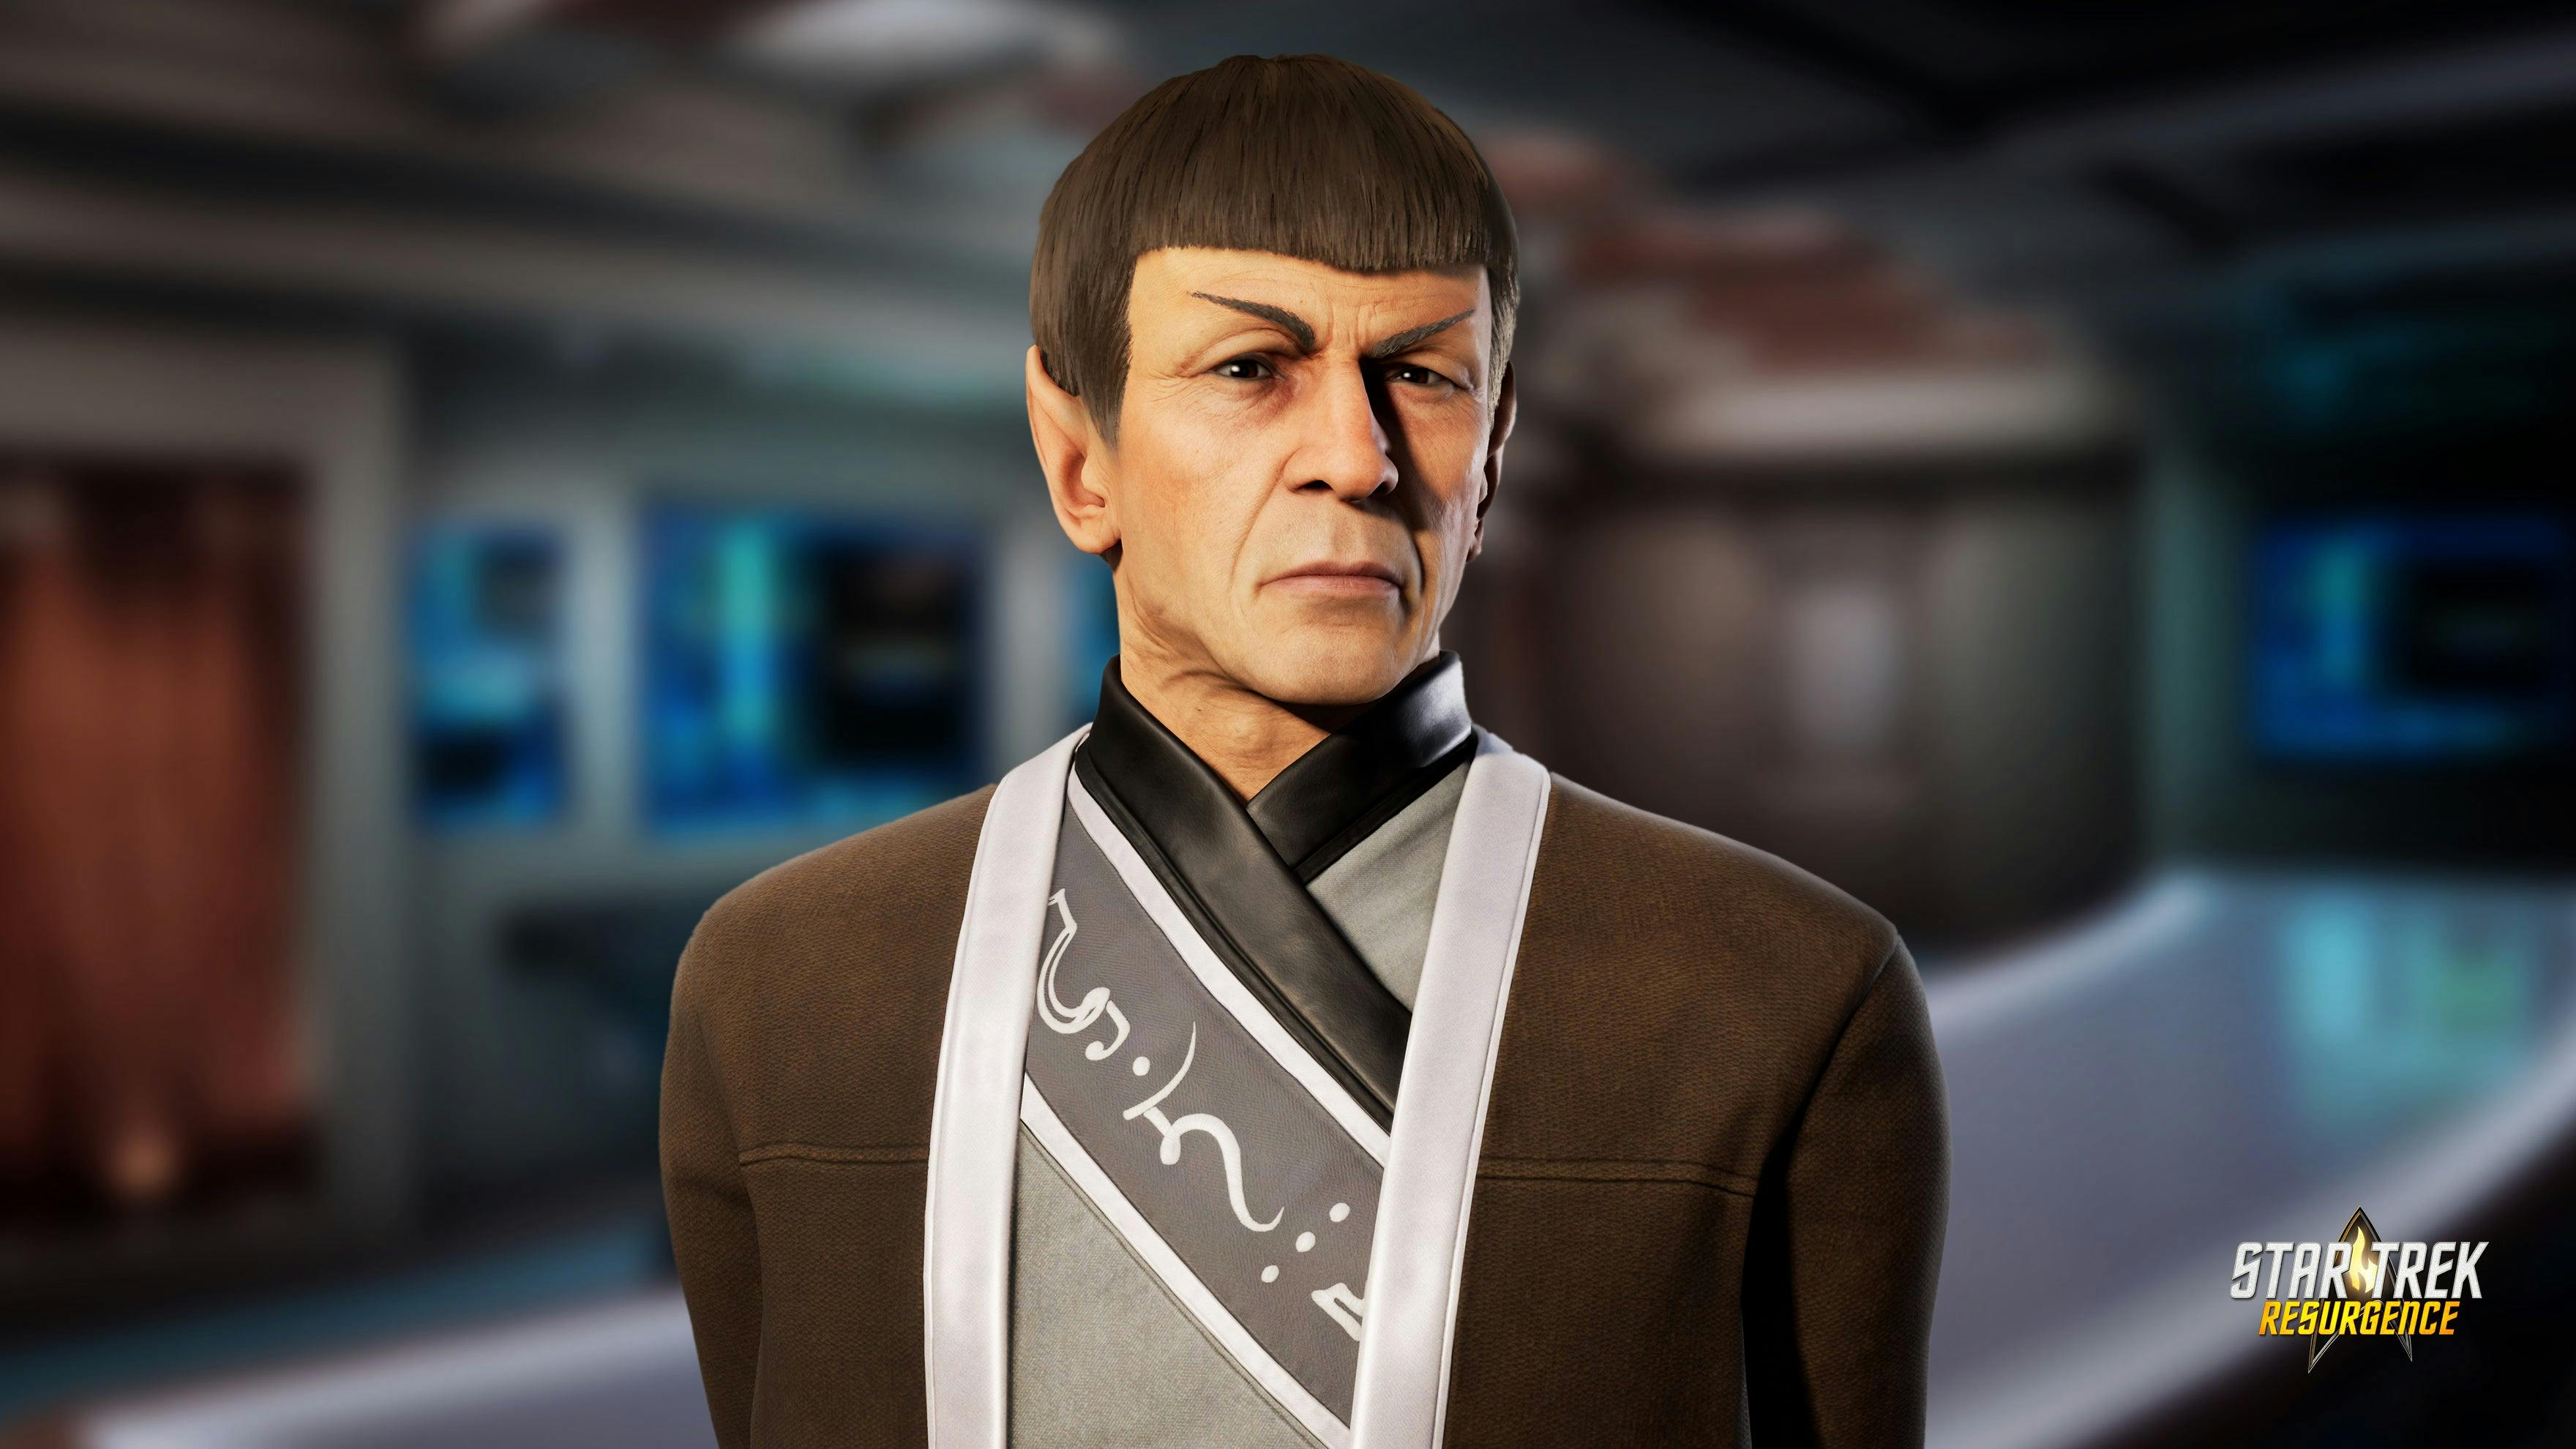 Star Trek: Resurgence still of Ambassador Spock rendering in-game promotional image